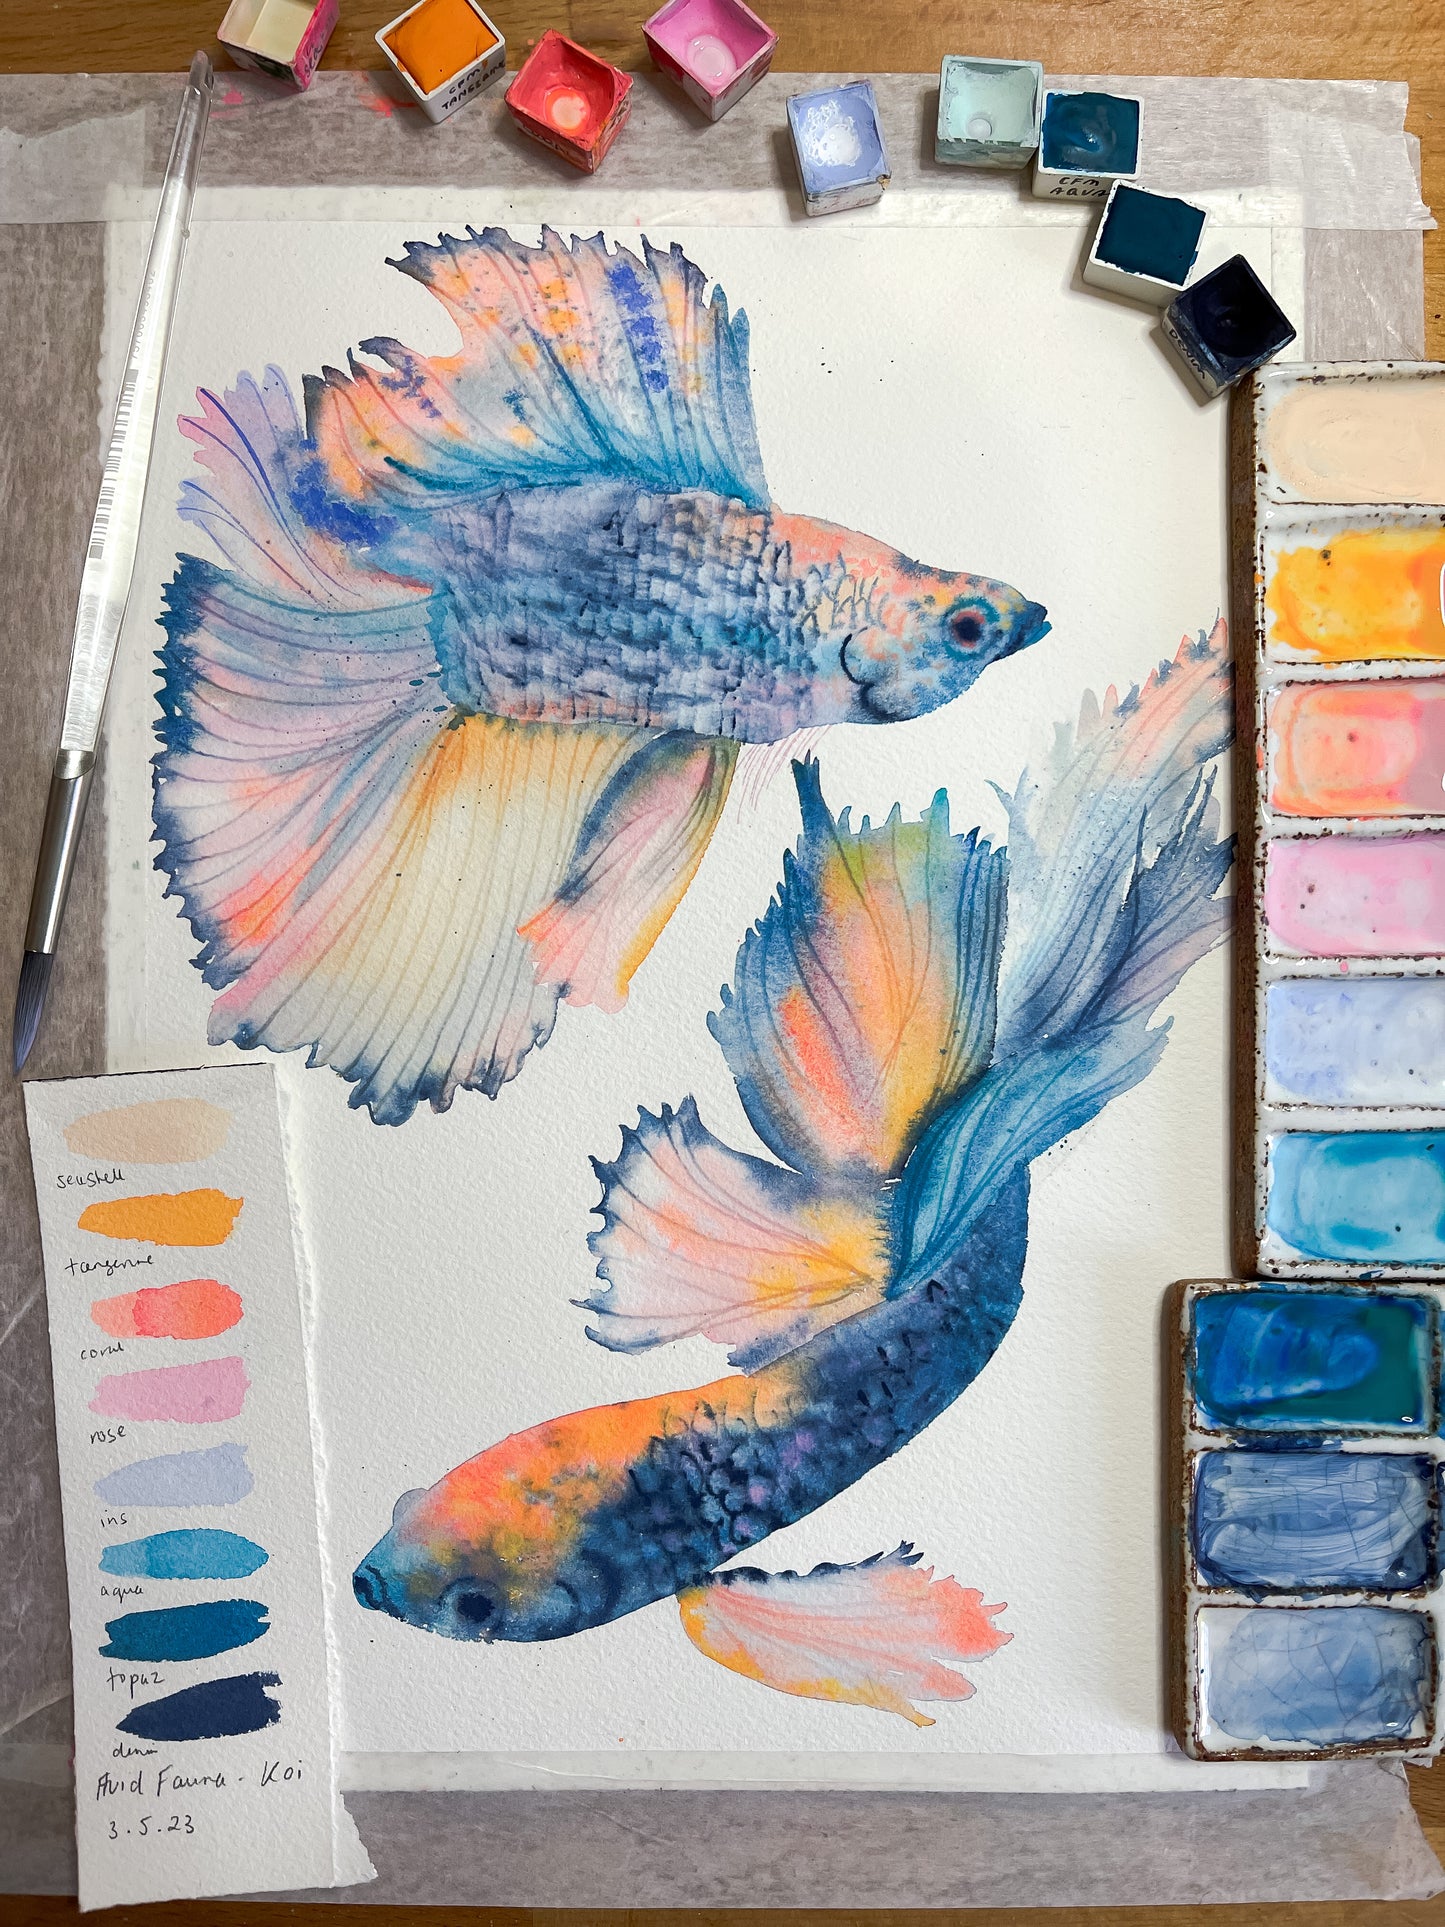 Fluid Fauna - Koi Fish with Claire Wilson